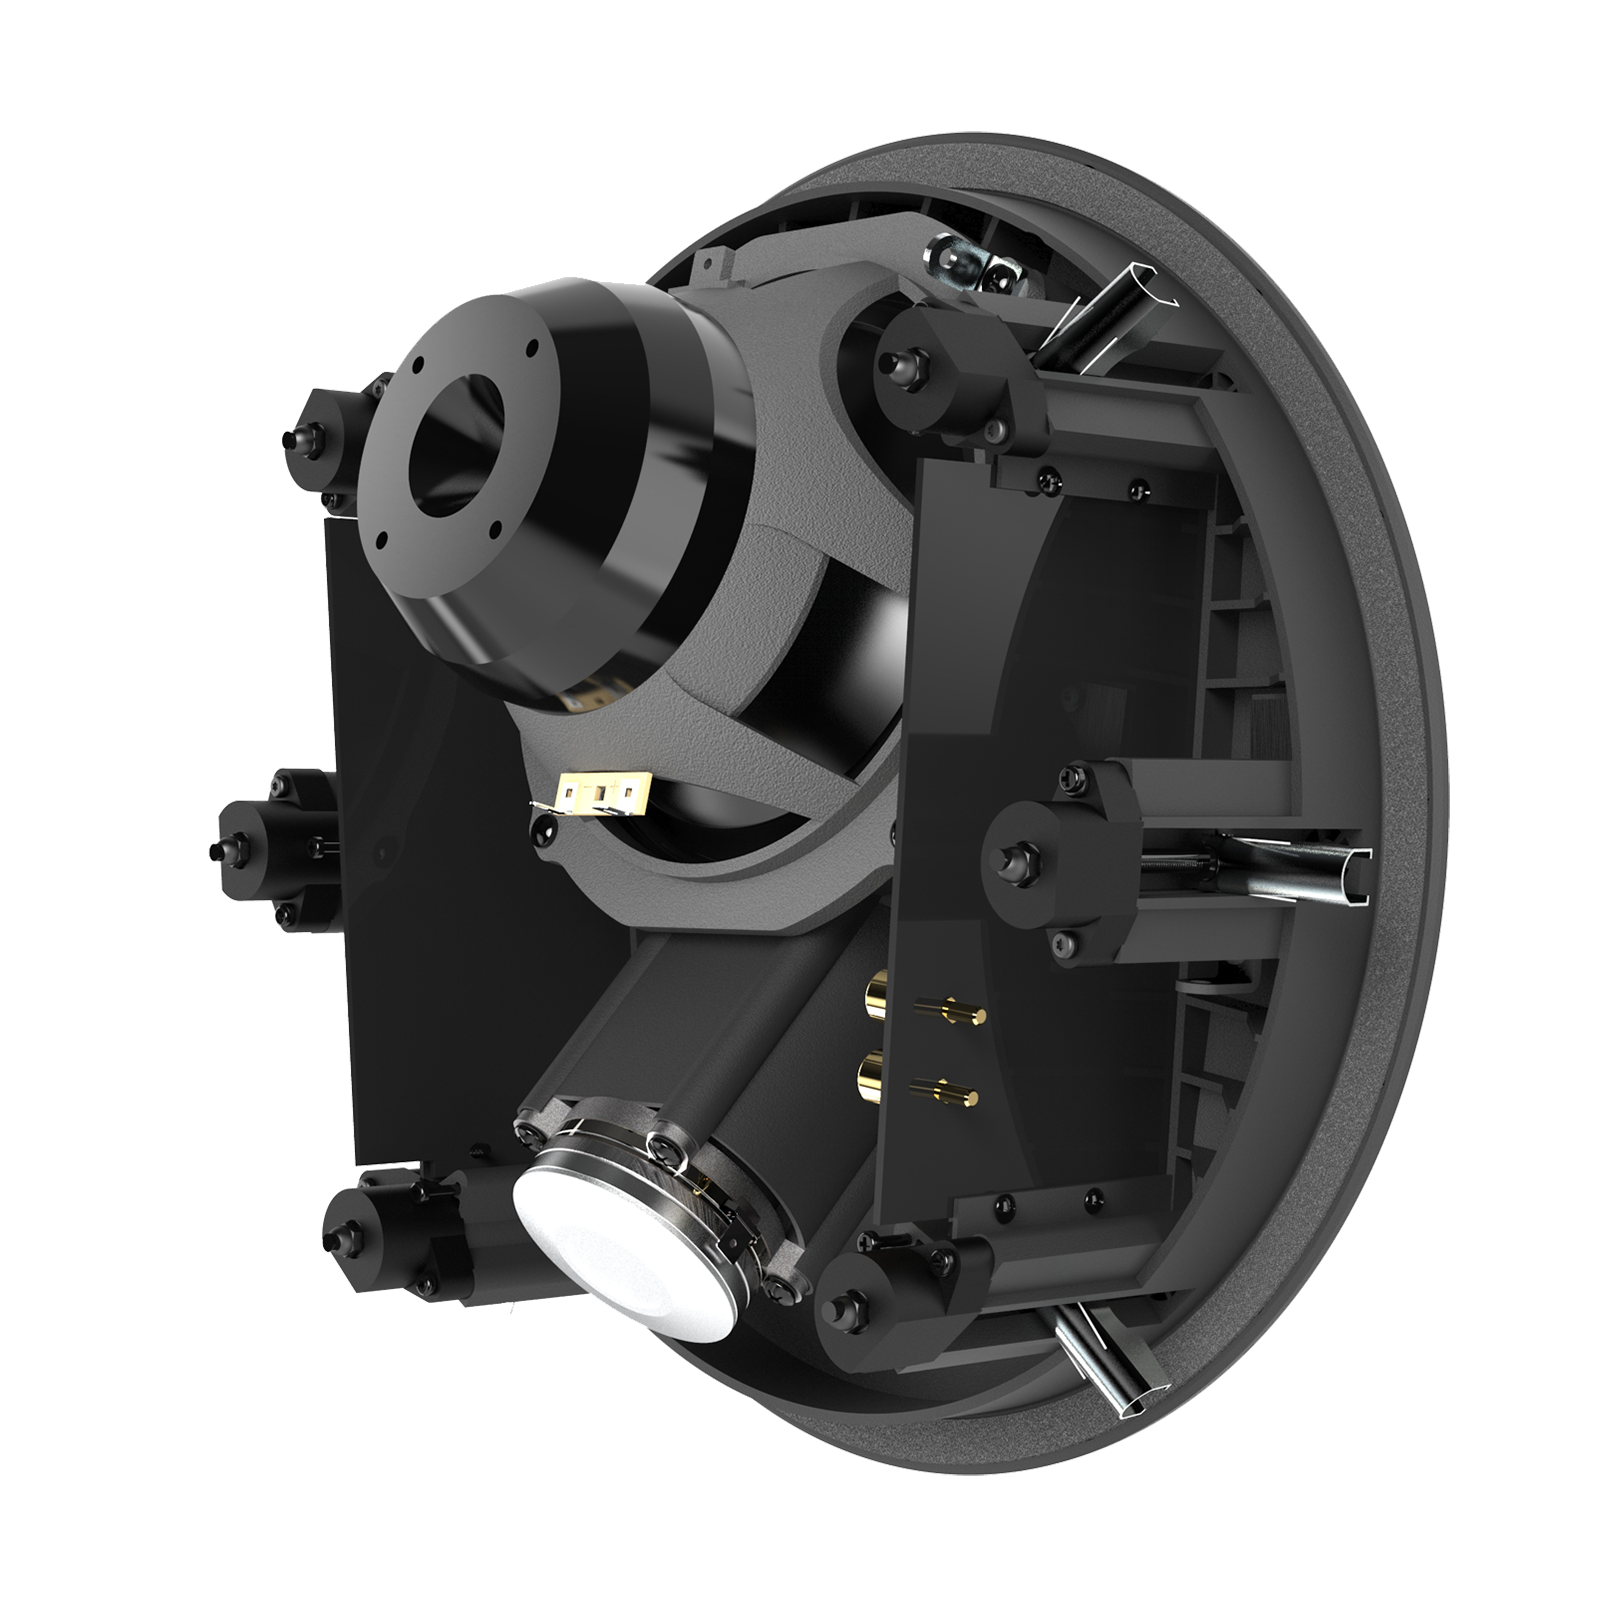 SCL-5 - Black - Two-way 7-inch (180mm) In-Ceiling Loudspeaker - Back